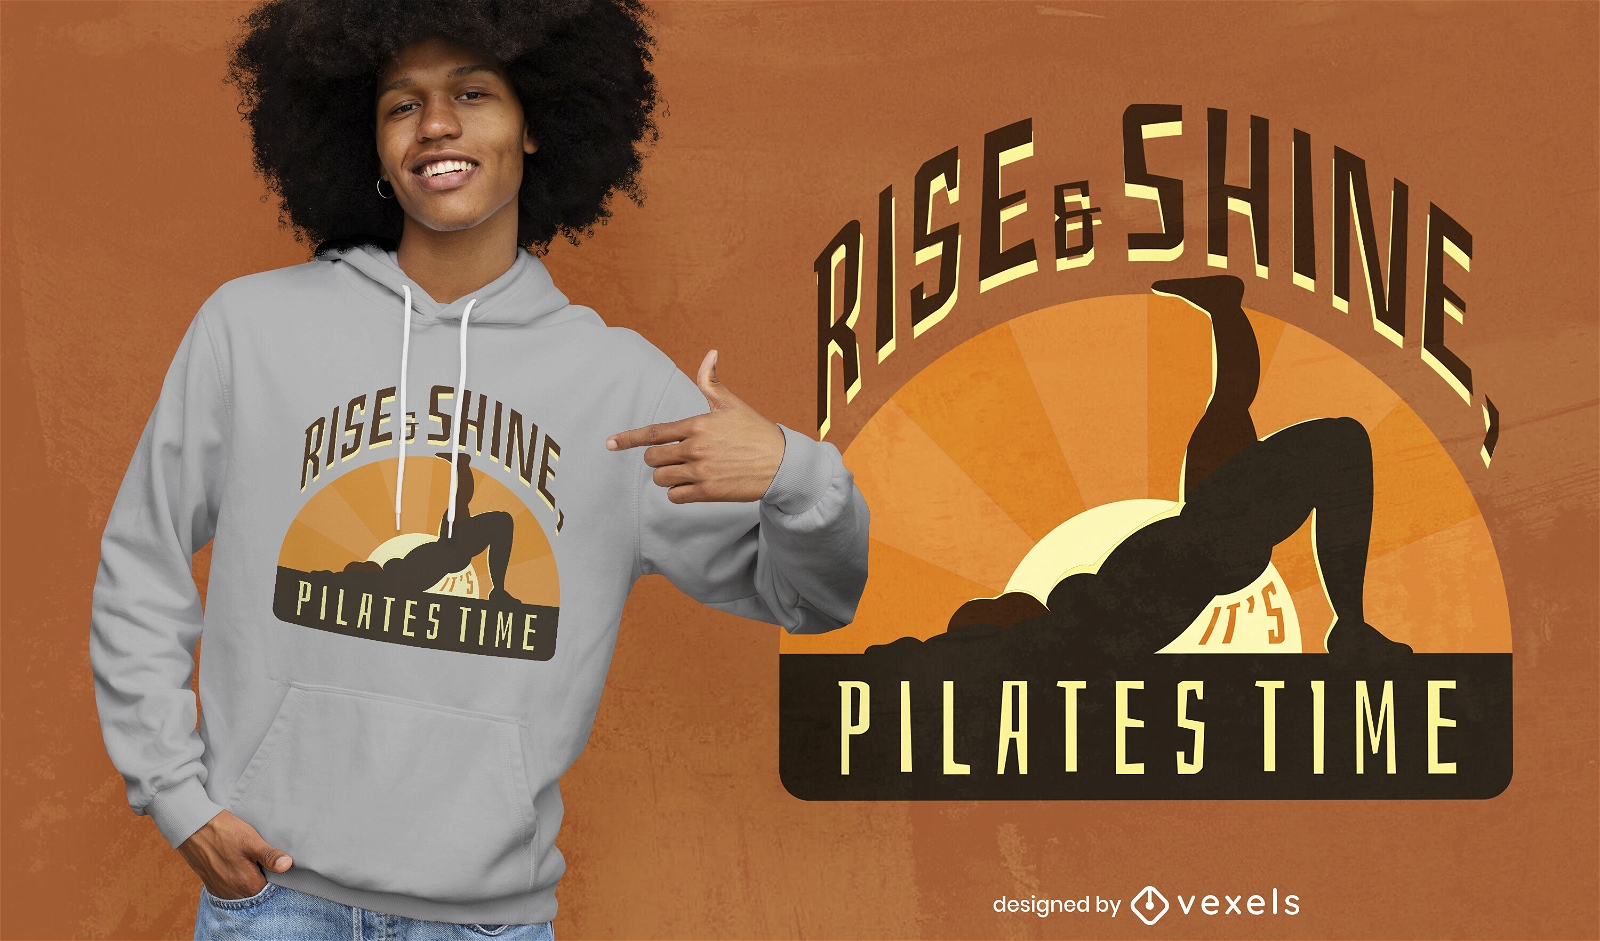 Rise & shine pilates quote t-shirt design